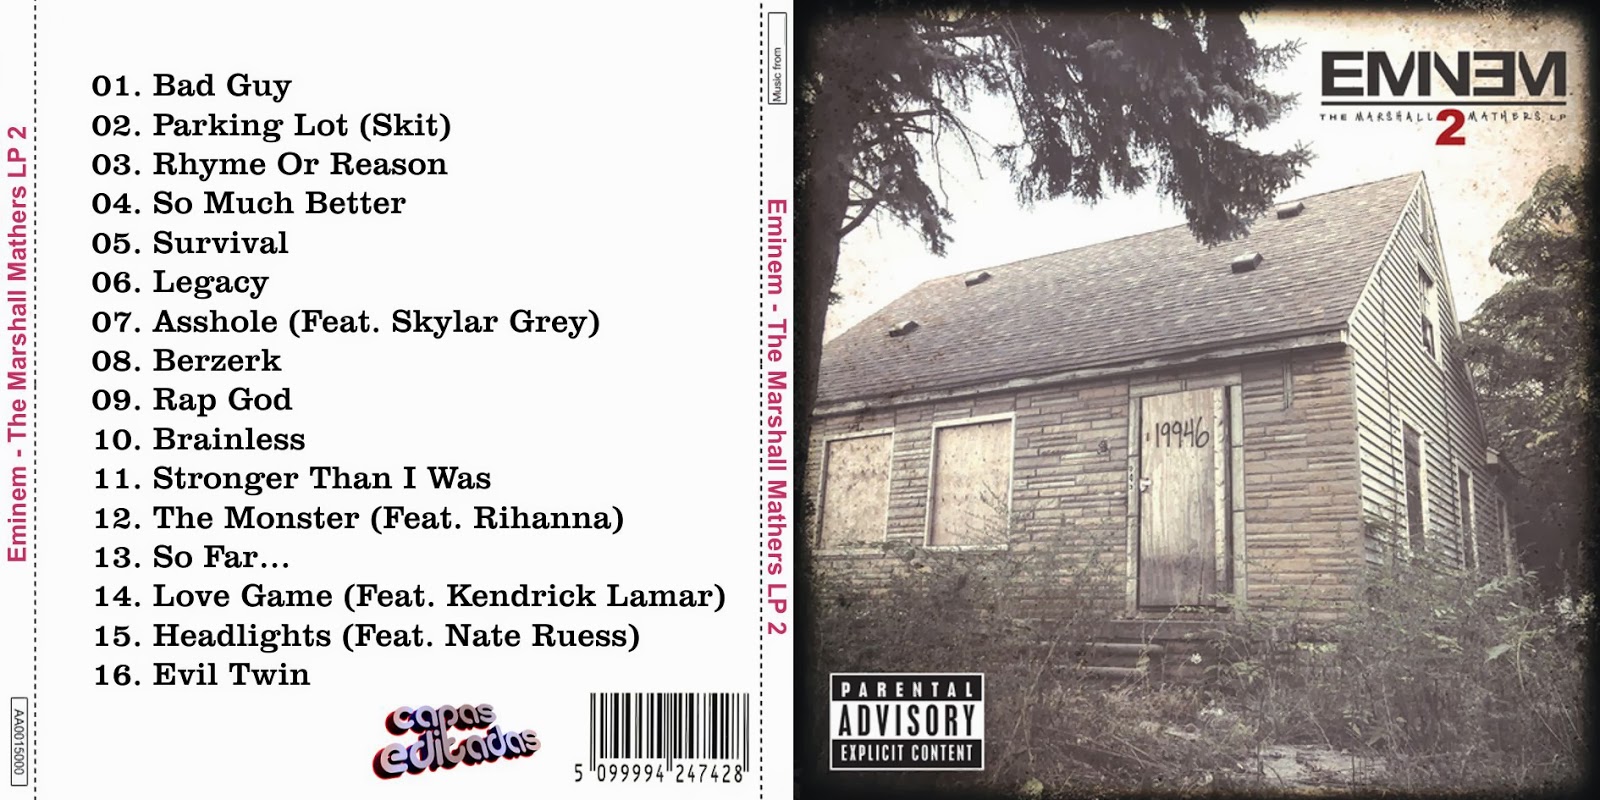 Eminem The Marshall Mathers Lp 2 Zip Free Download - kisembh1600 x 800